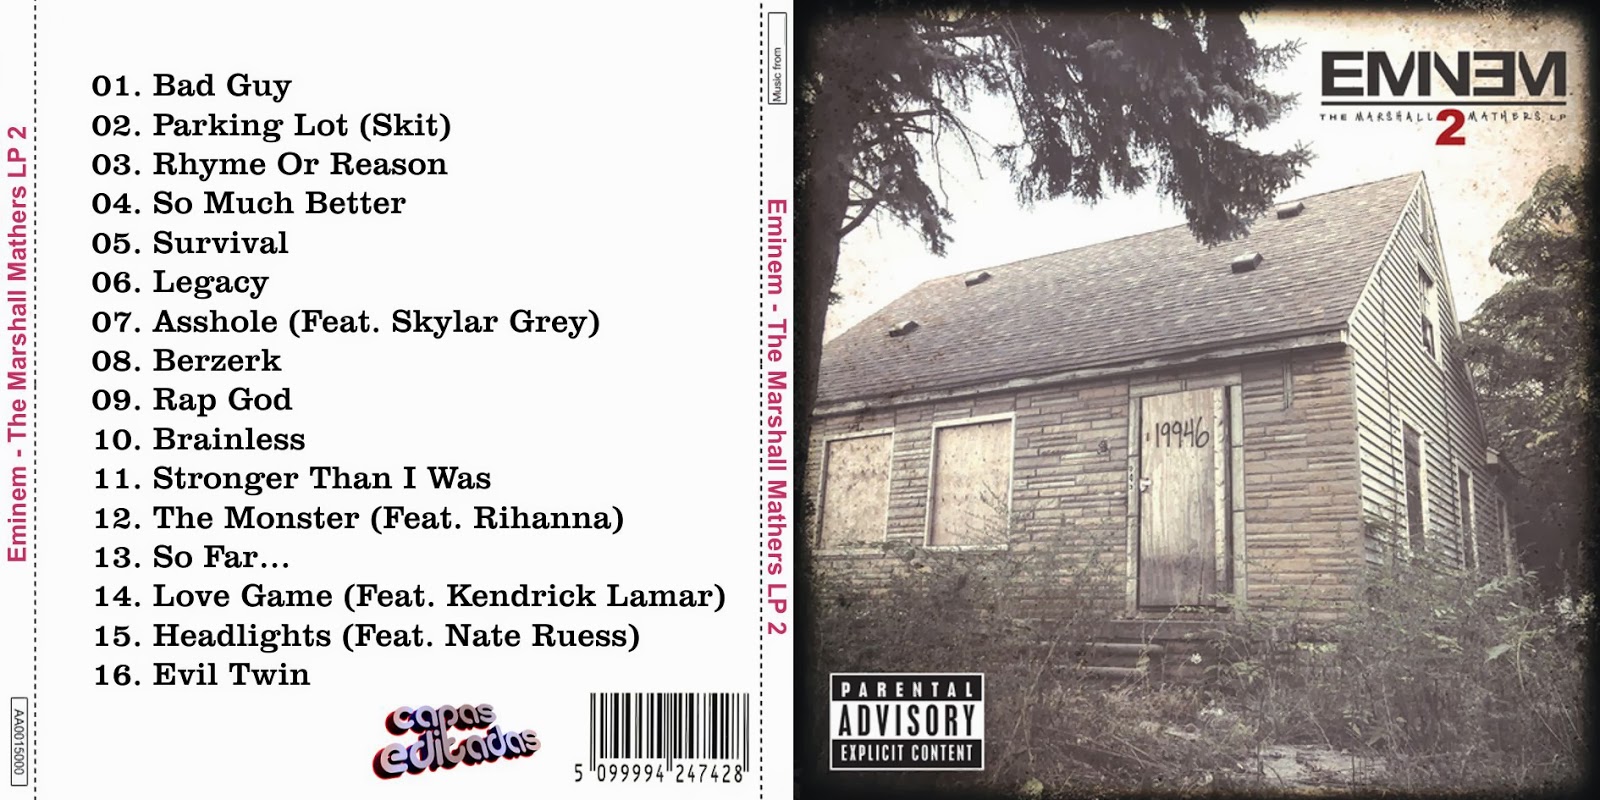 Eminem The Marshall Mathers Lp 2 Zip Free Download - kisembh1600 x 800